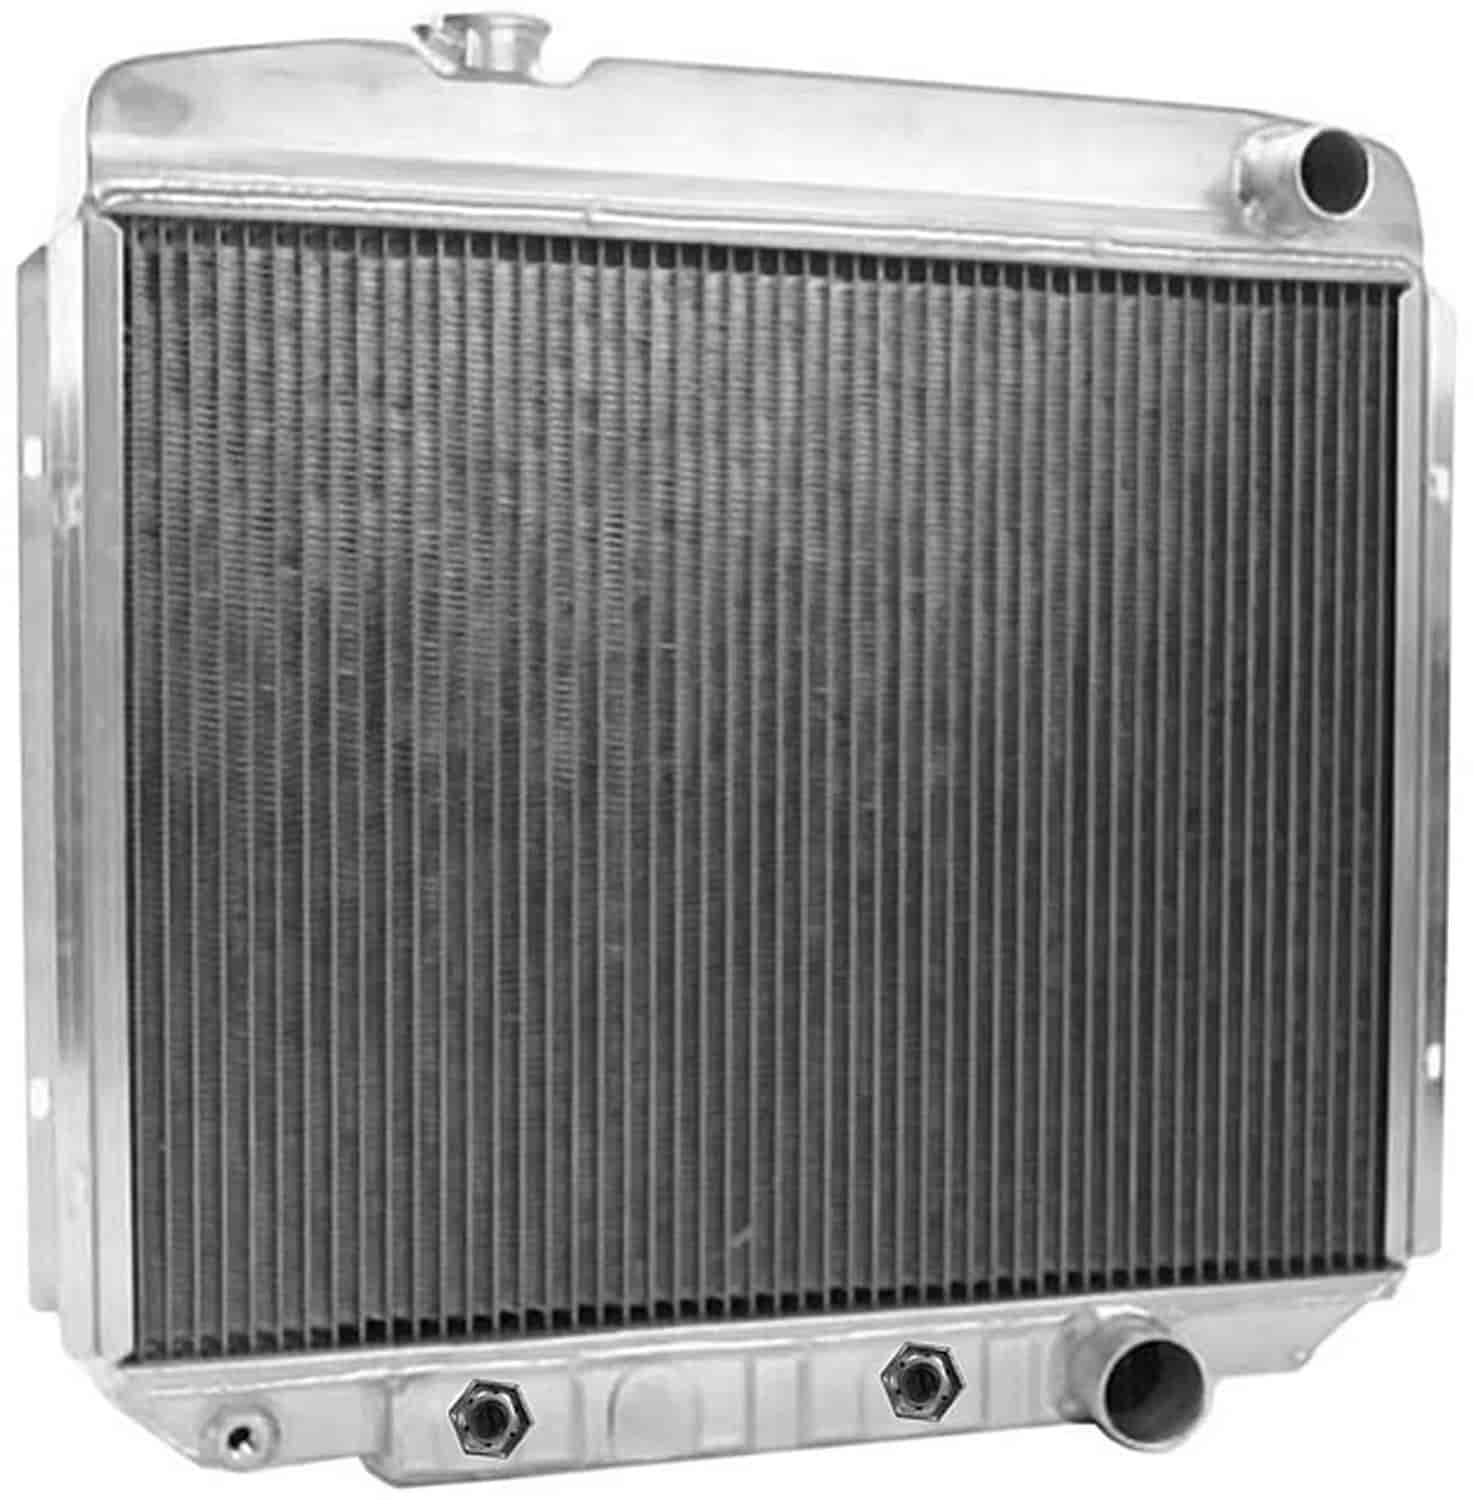 ExactFit Radiator for 1967-1969 Fairlane, Falcon, Torino,